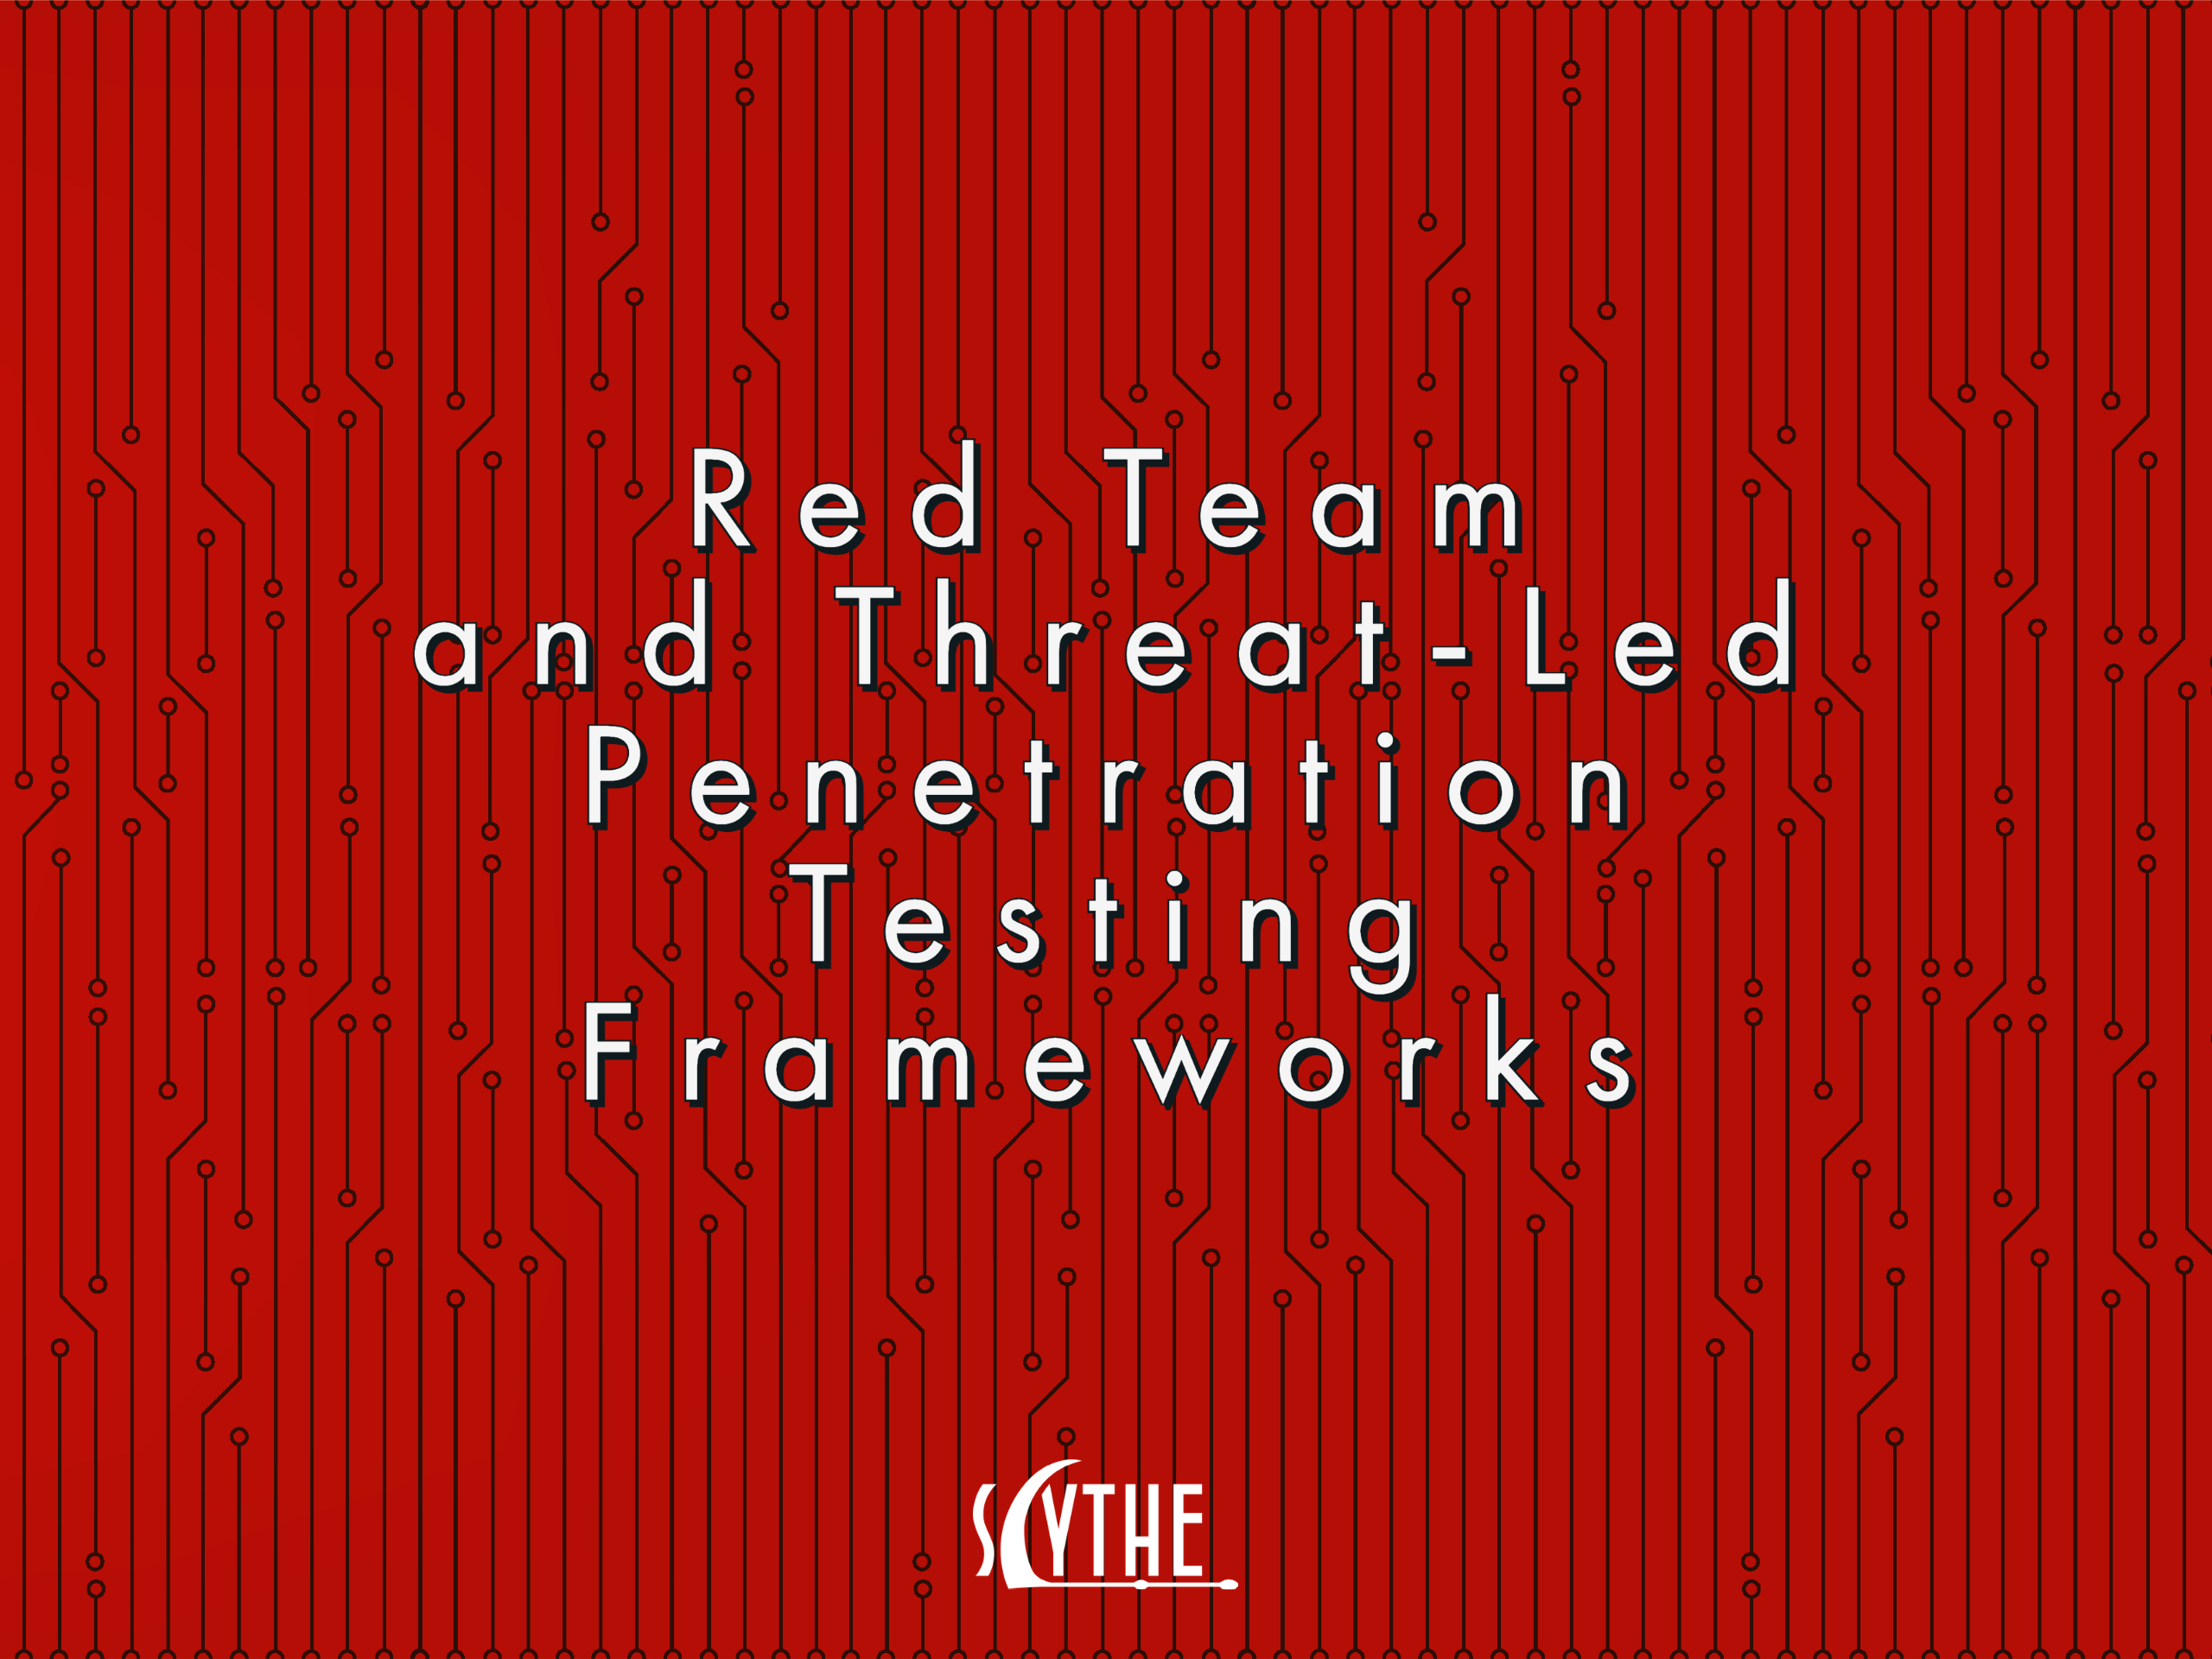 Red Team and Threat-Led Penetration Testing Frameworks